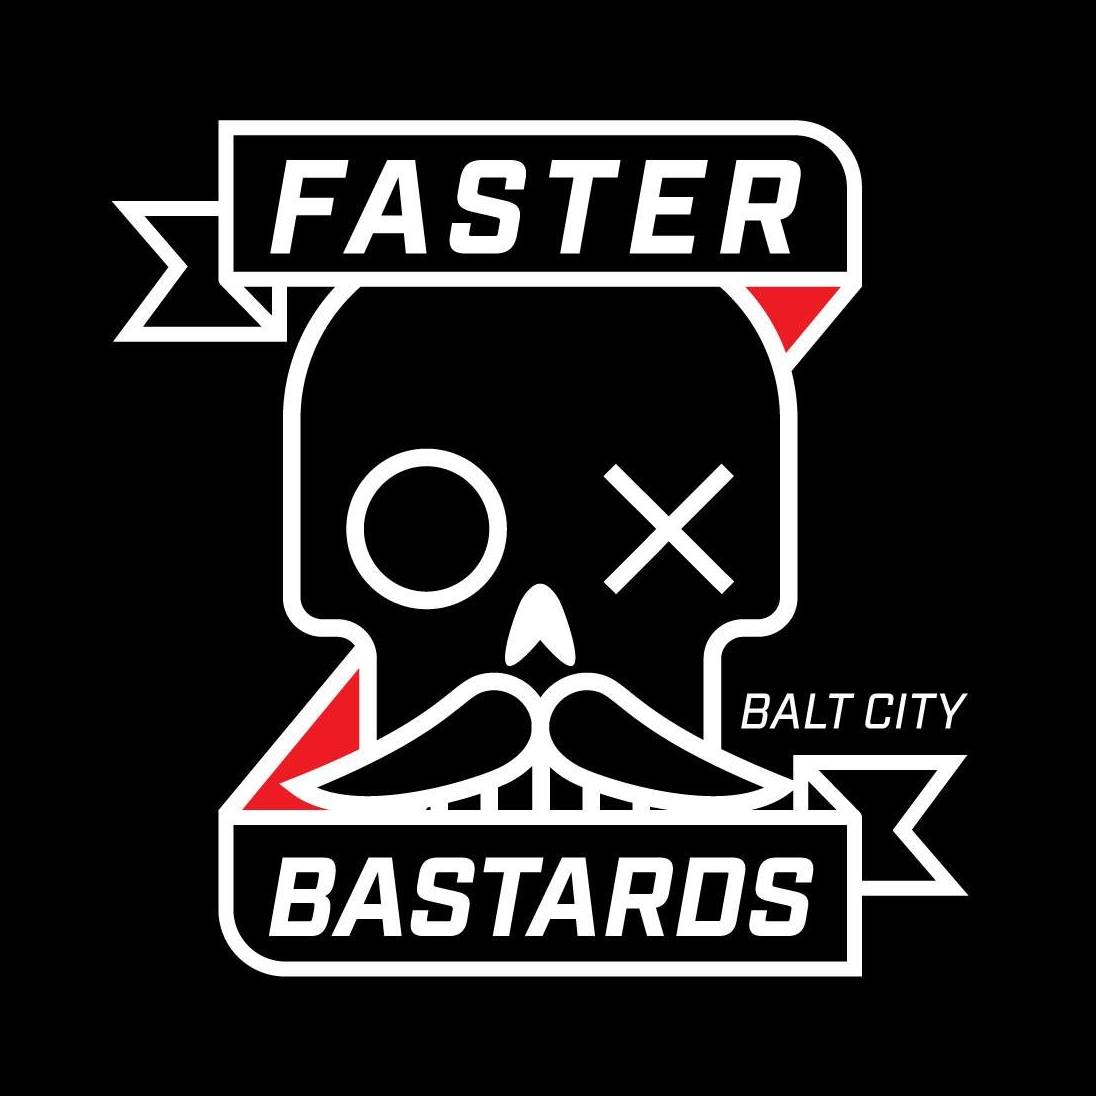 Faster Bastards B’more City Running Club